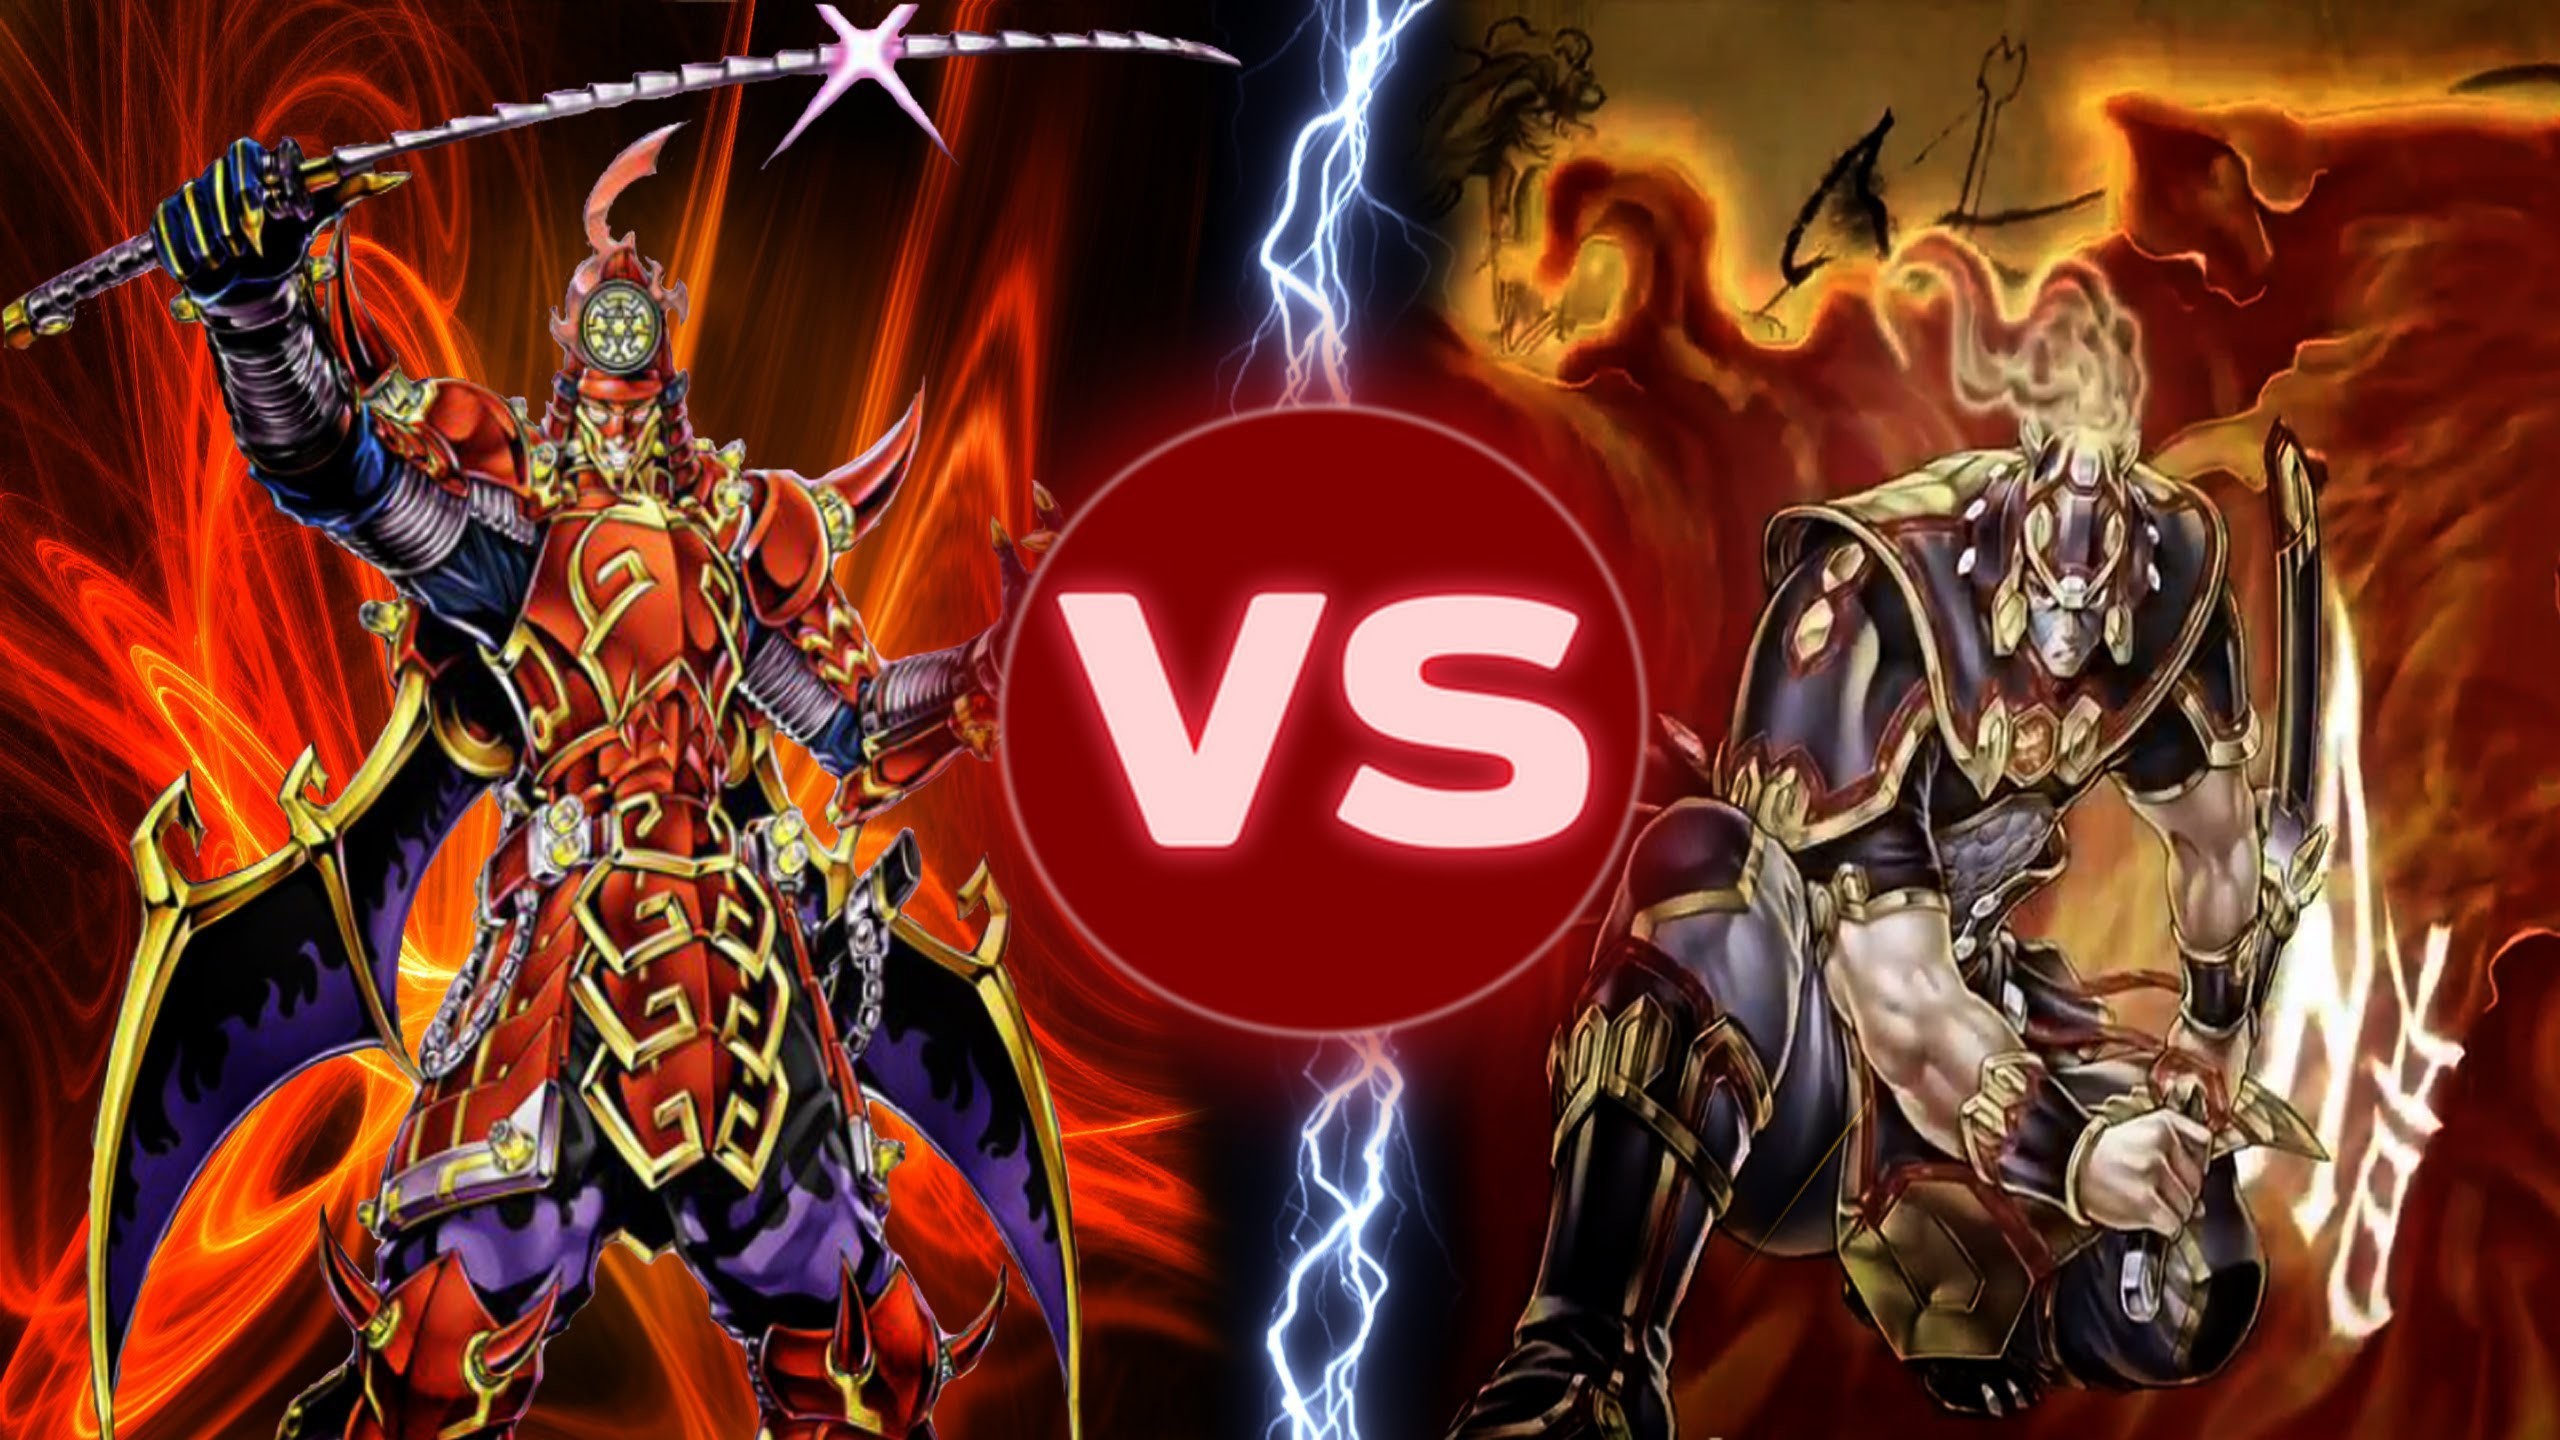 2560x1440 Yugioh Duel - Six Samurais Vs Fire Fist!! 2013! (Dueling Network) - YouTube